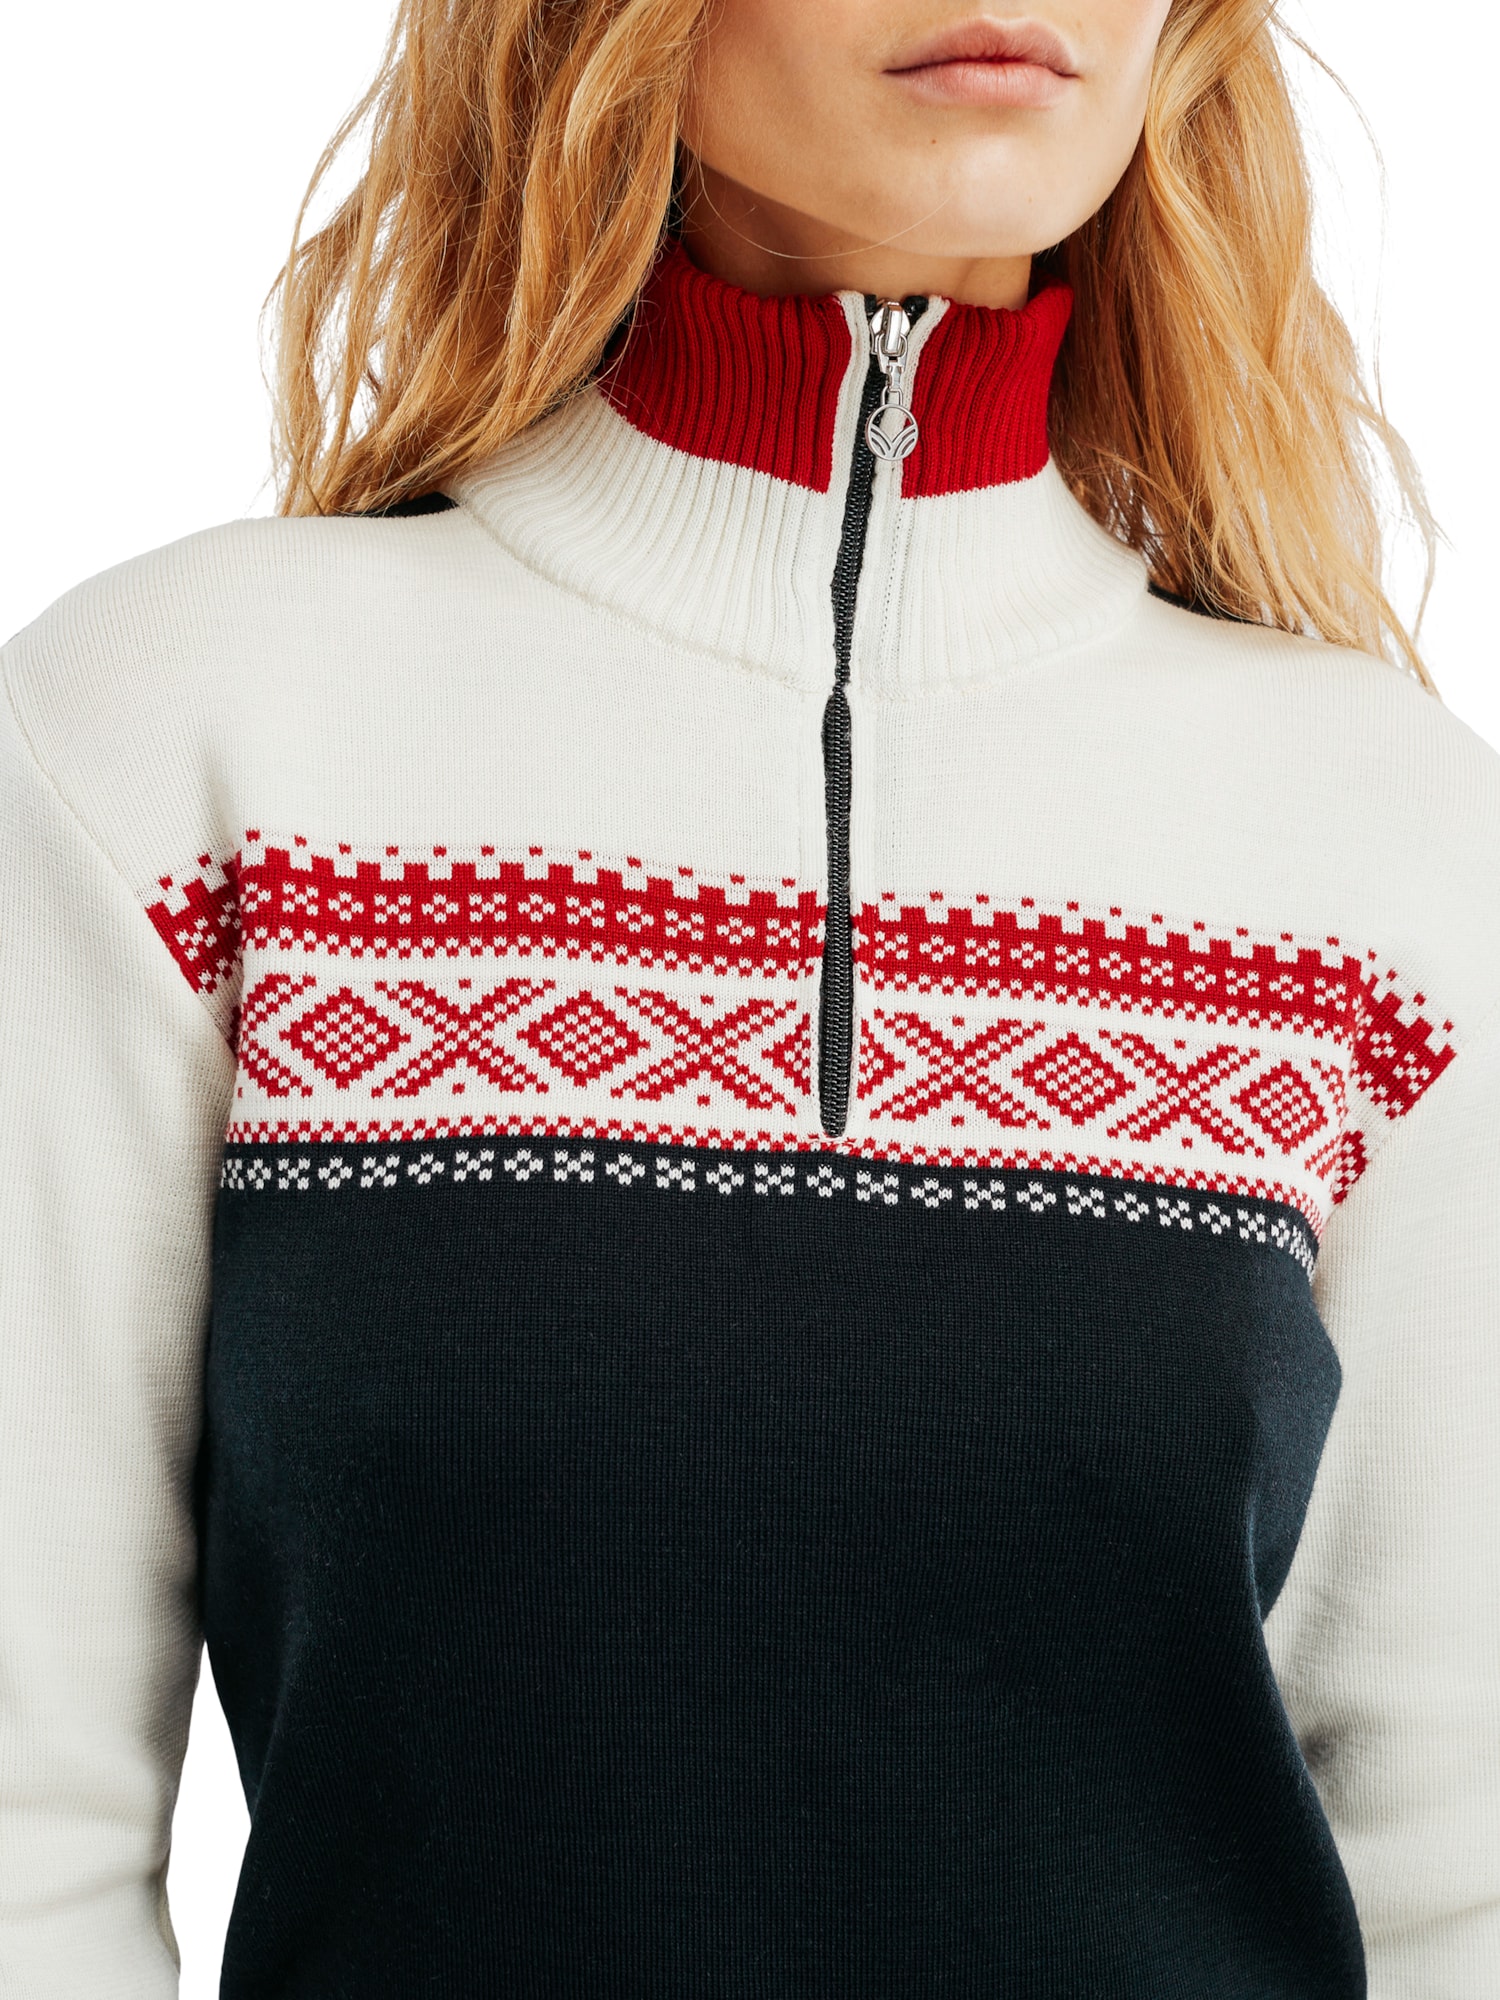 Dystingen sweater - Women - Black - Dale of Norway - Dale of Norway